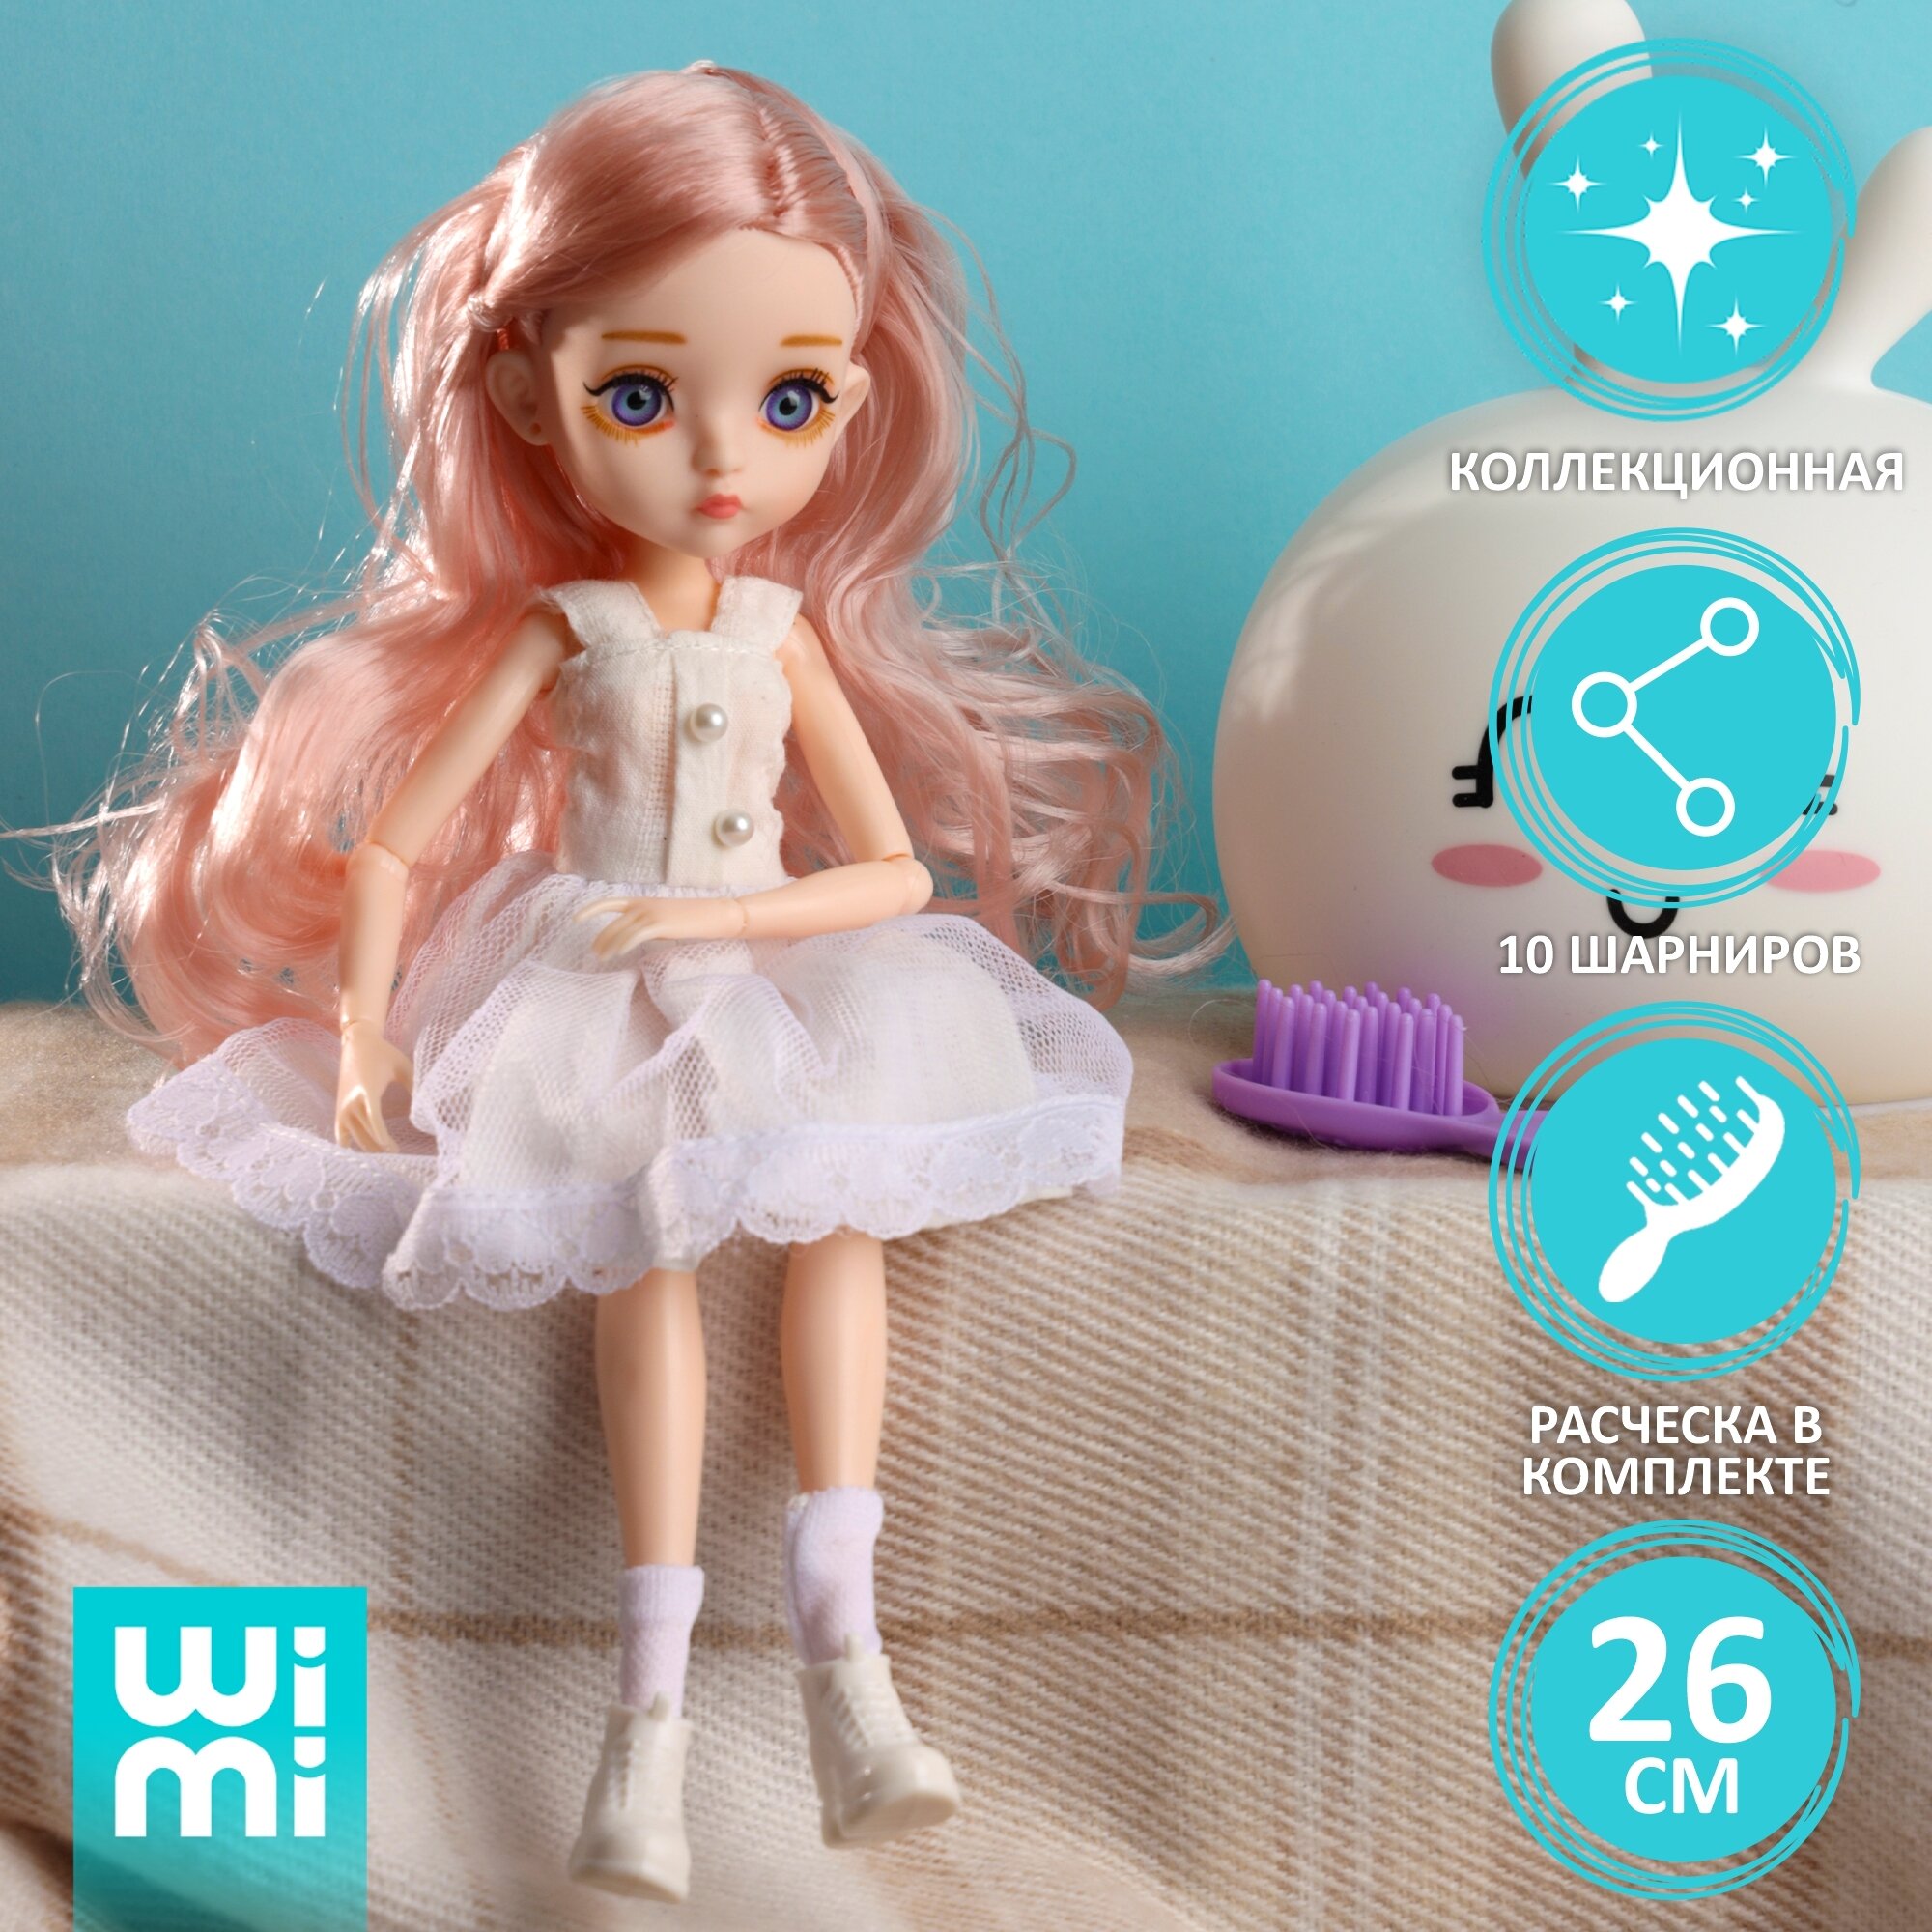 Шарнирная кукла WiMi, бжд куколка на шарнирах с большими глазами и аксессуарами